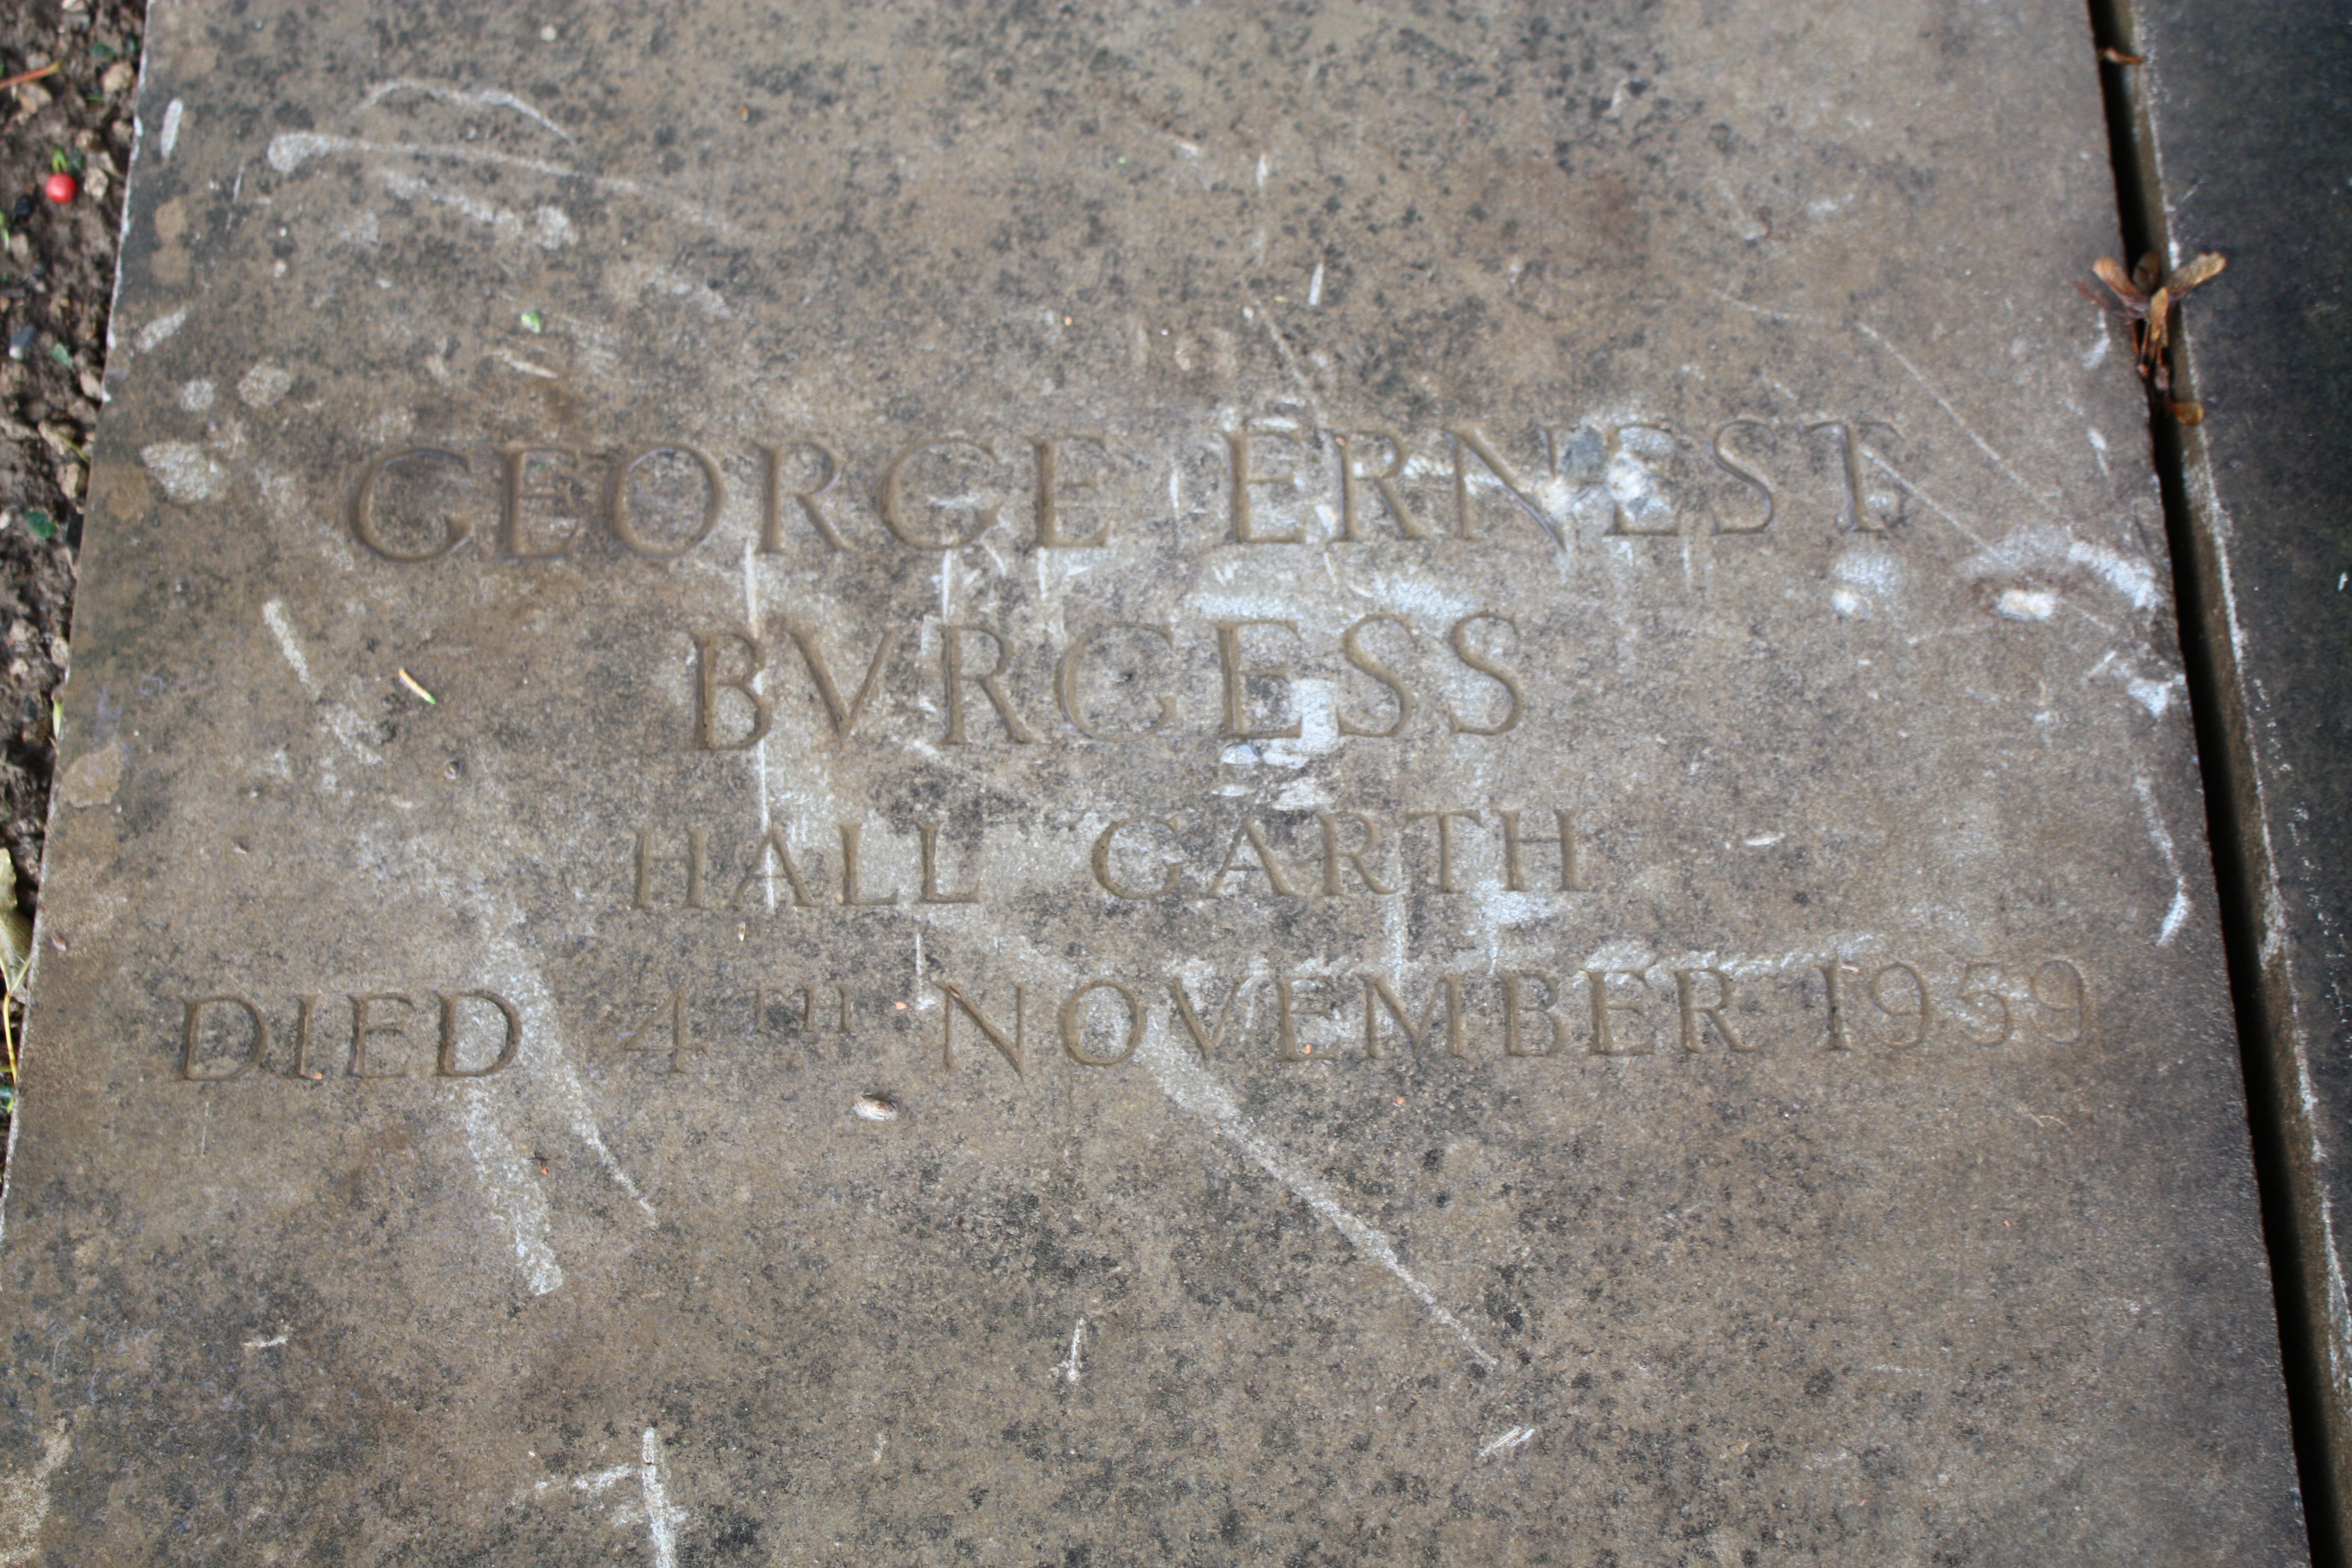 George Burgess gravestone